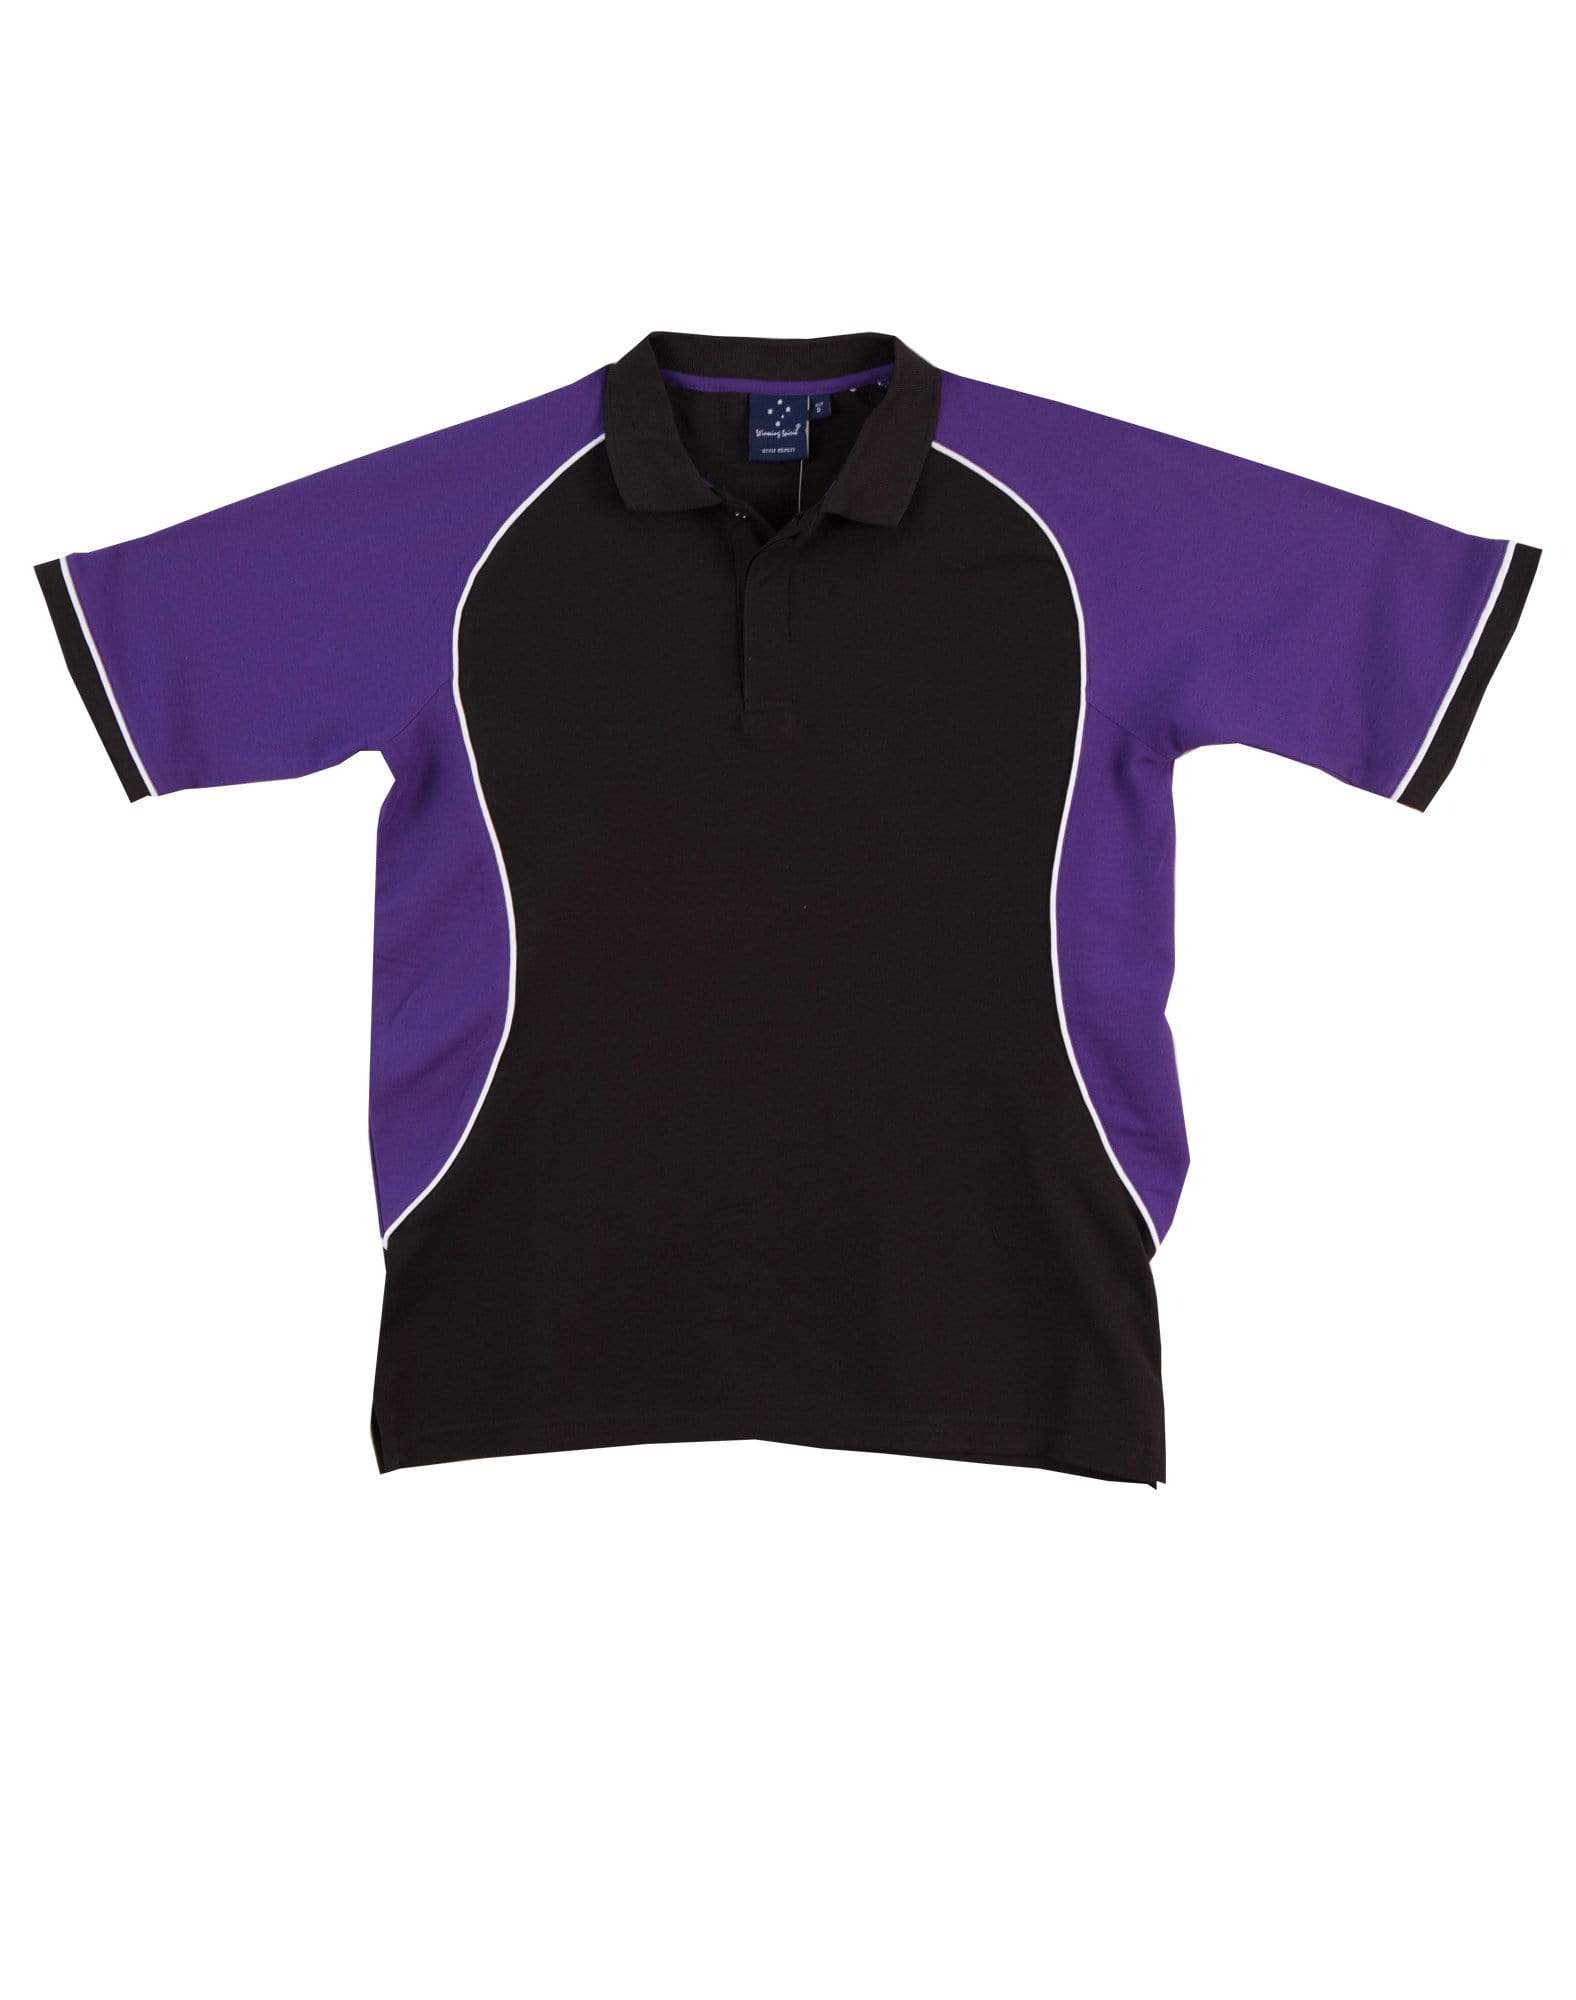 Winning Spirit Casual Wear Black/White/Purple / 8 Winning Spirit Arena Polo Shirt Women's Ps78